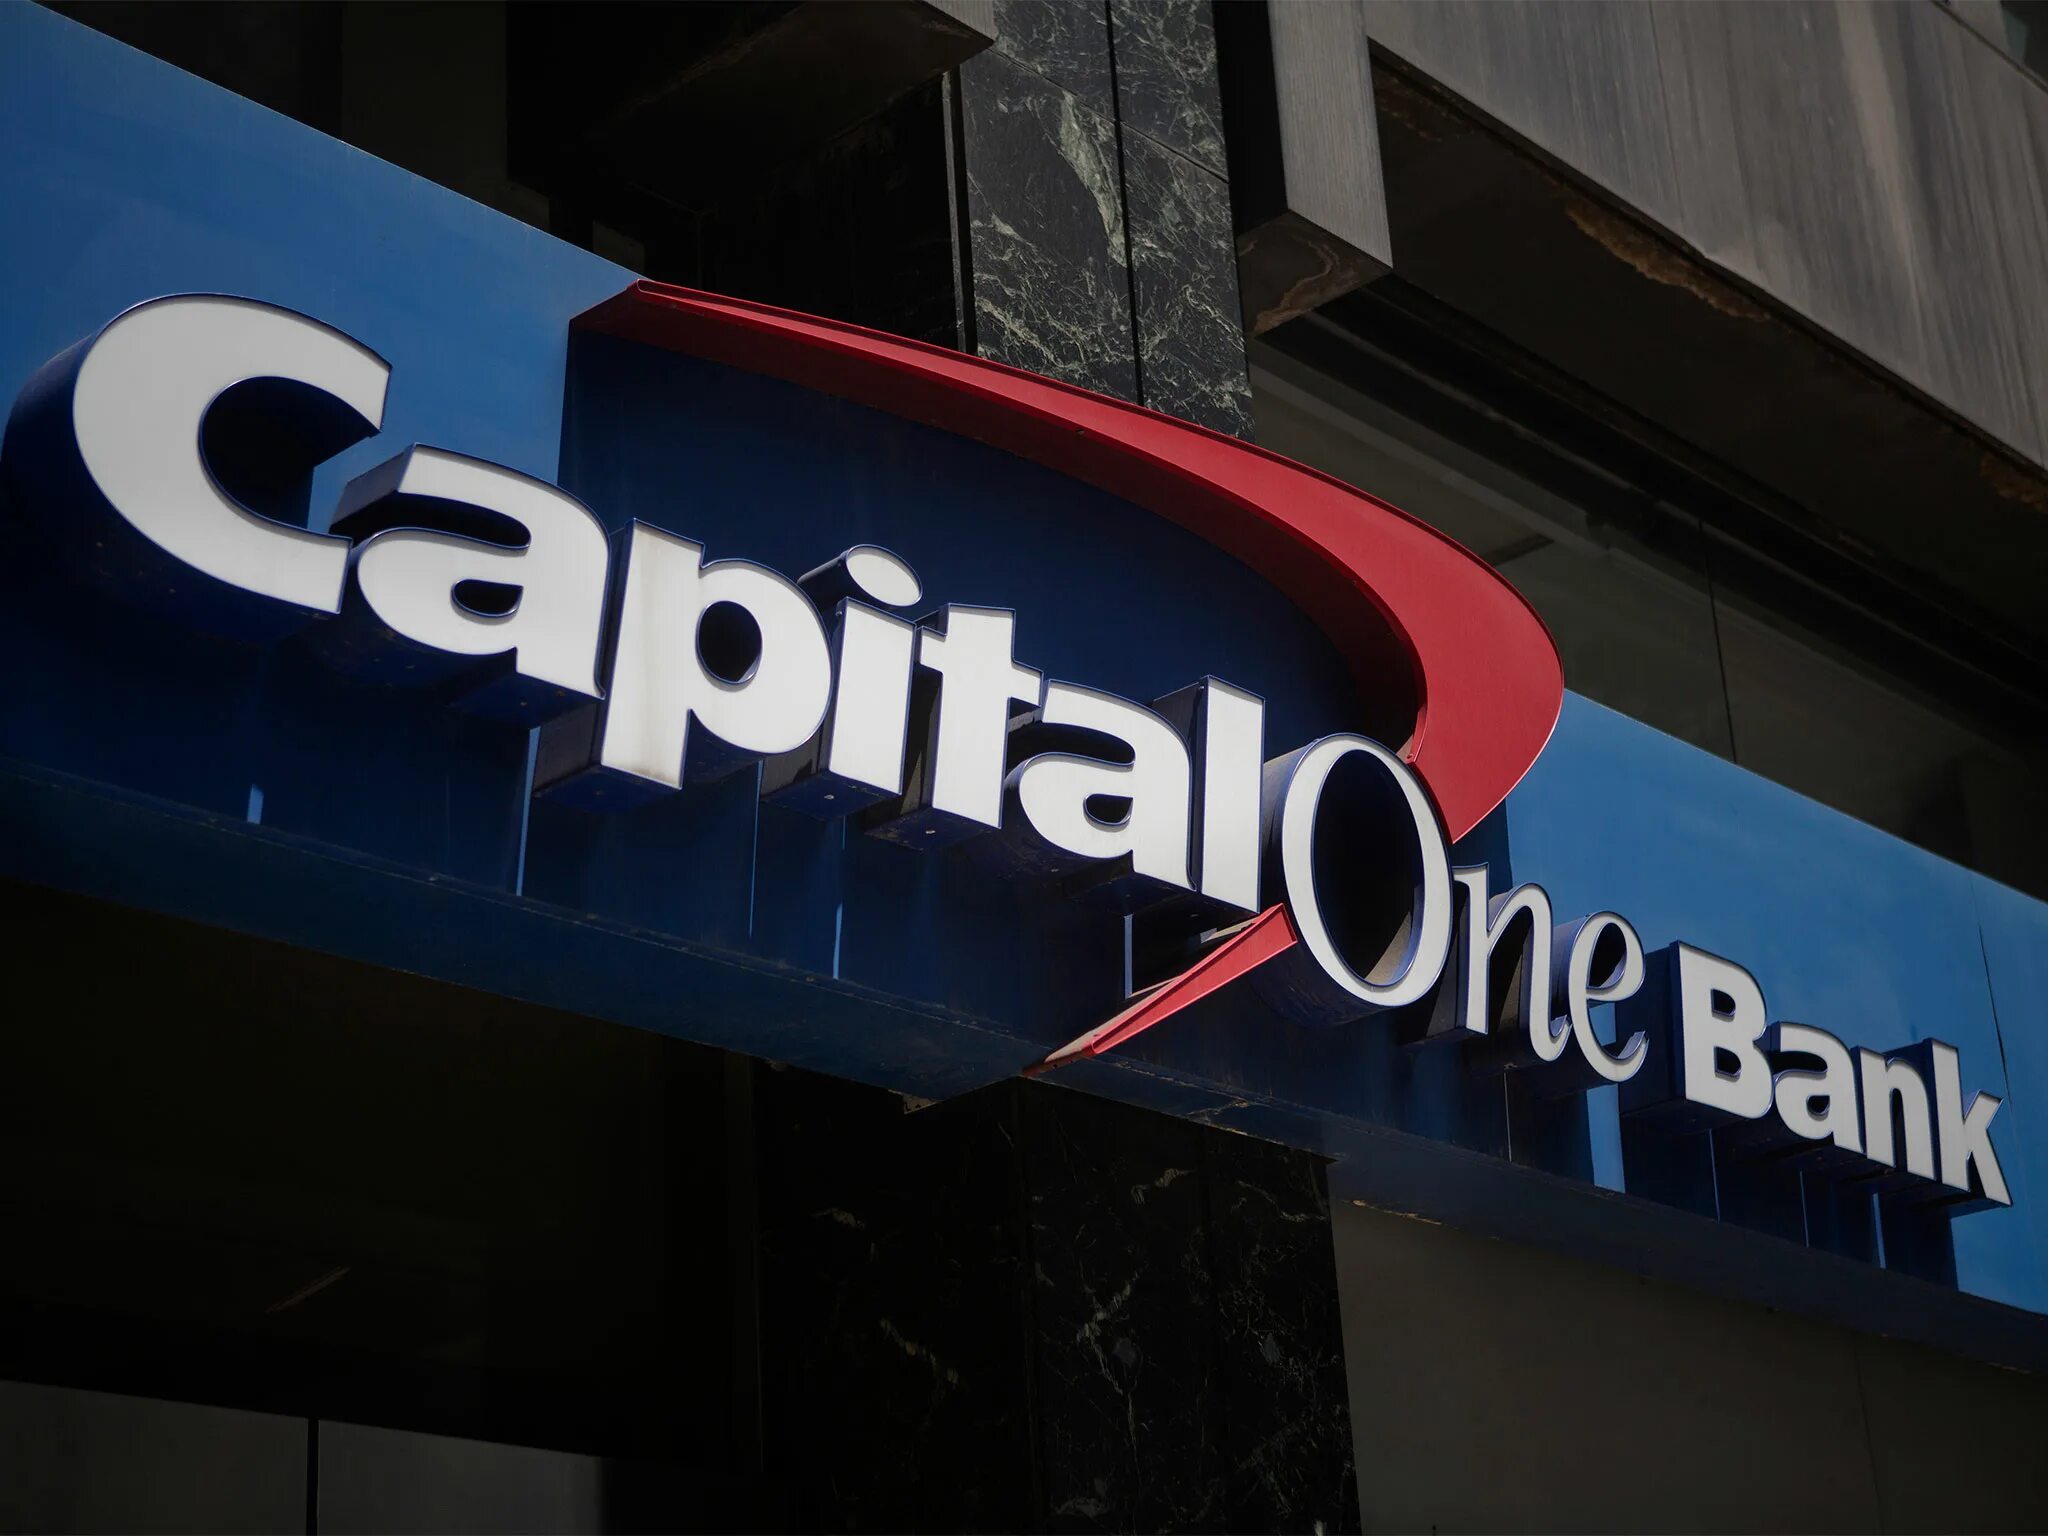 S one capital. Capital one. Capital one Bank. Capital one Financial Corporation портфель брендов. Capital one jpg.